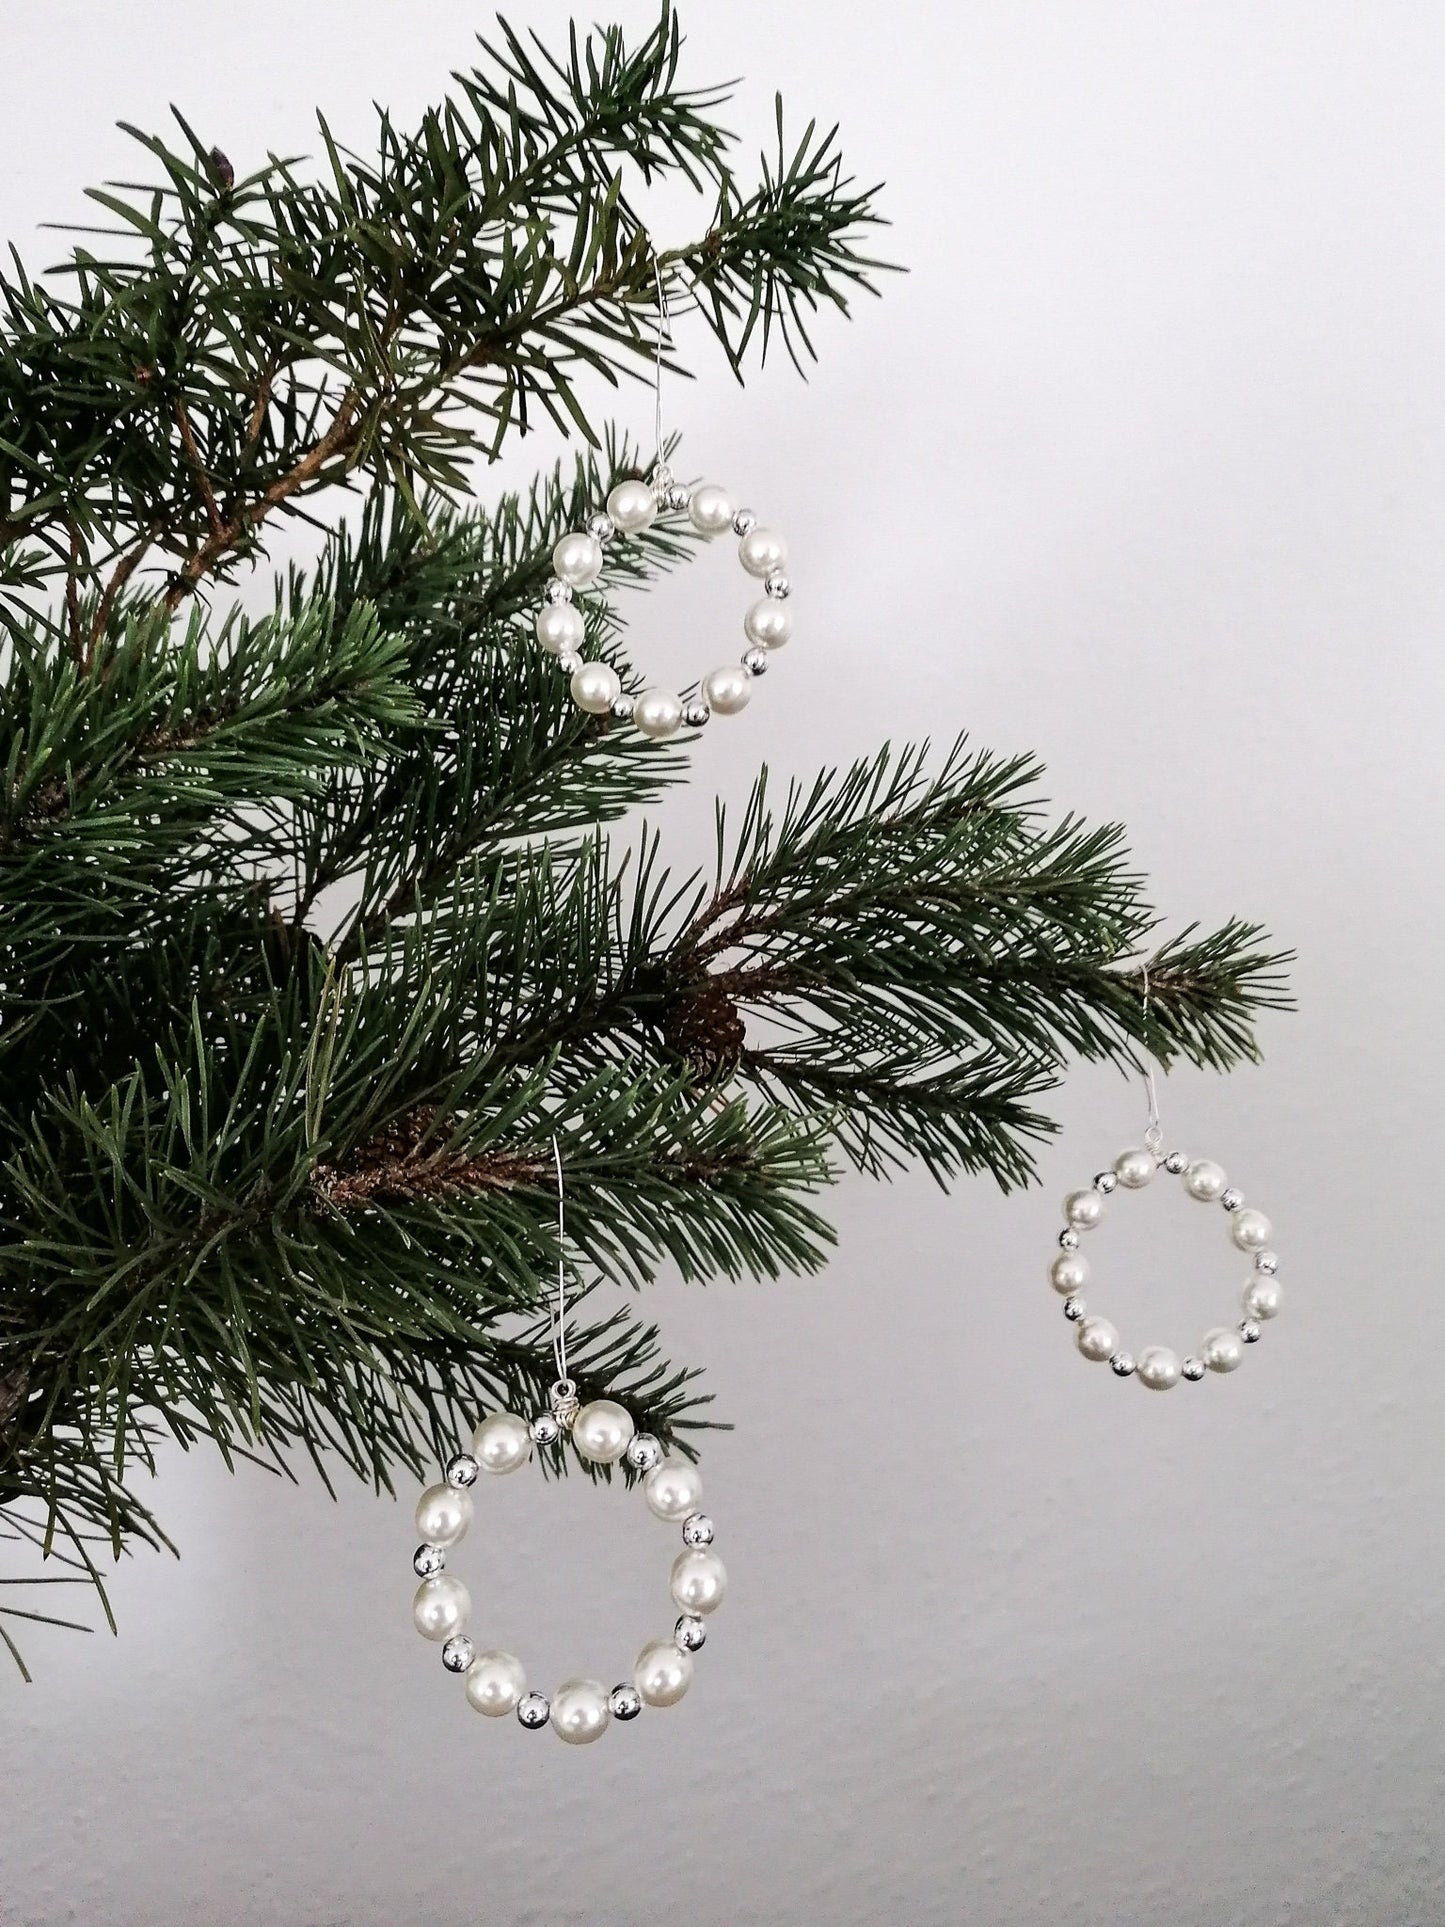 Pearl wreath christmas ornaments